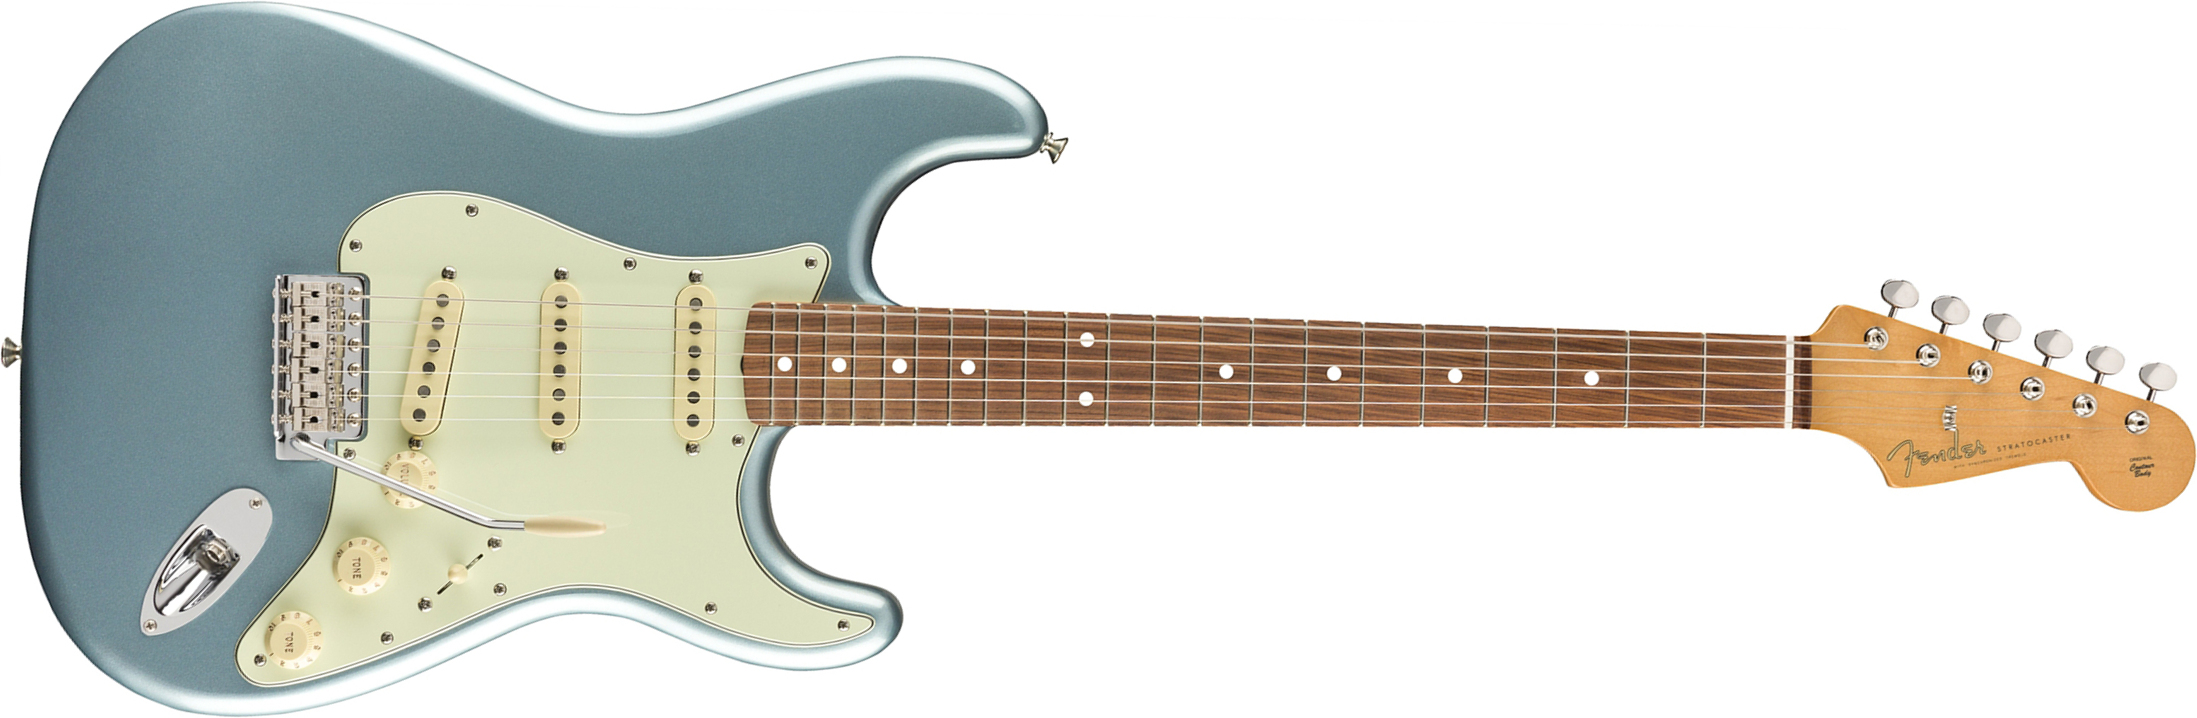 Fender Strat 60s Vintera Vintage Mex Pf - Ice Blue Metallic - Str shape electric guitar - Main picture